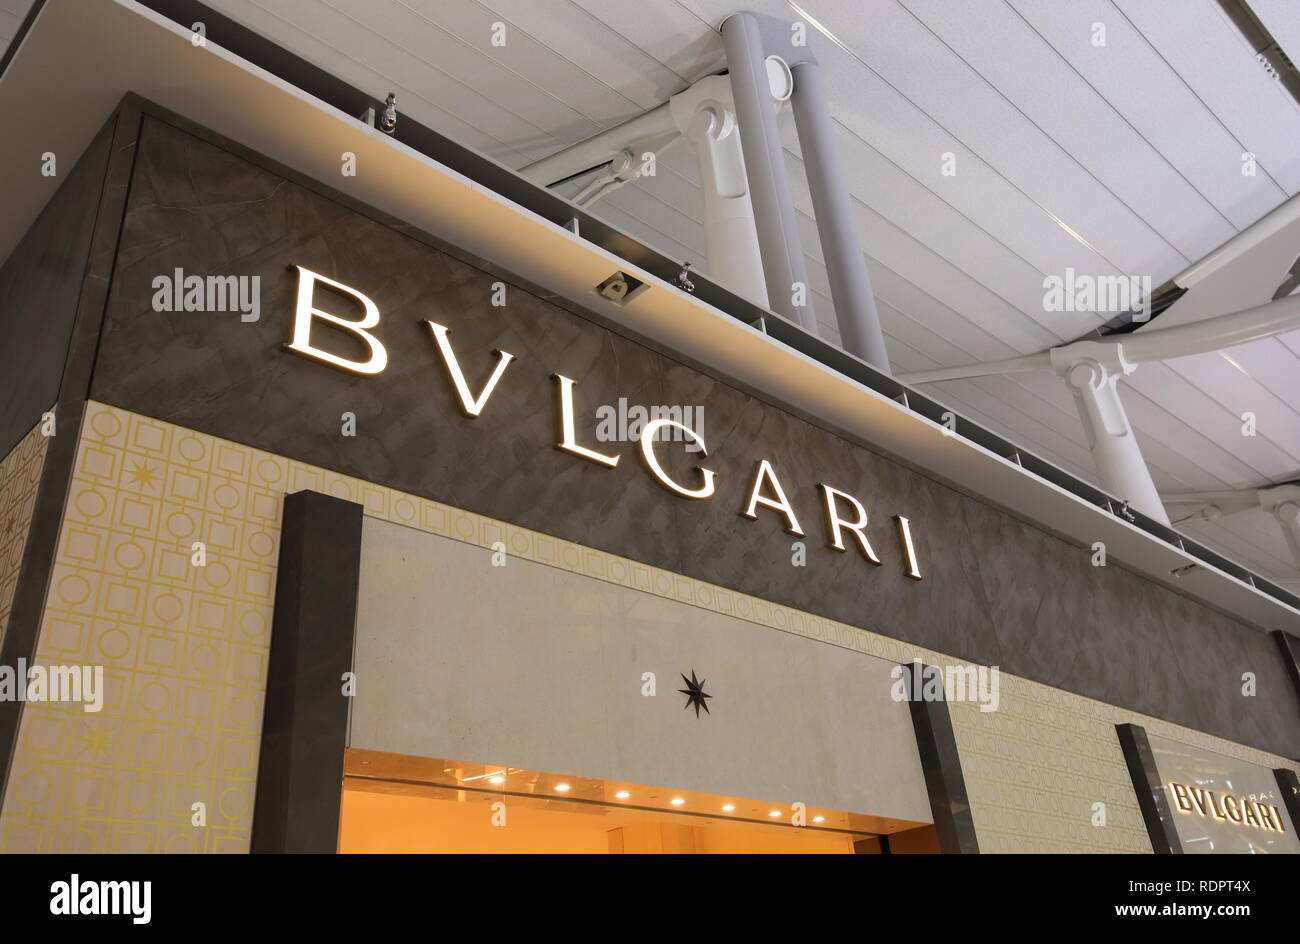 Bvlgari fashion brand company logo. Stock Photo